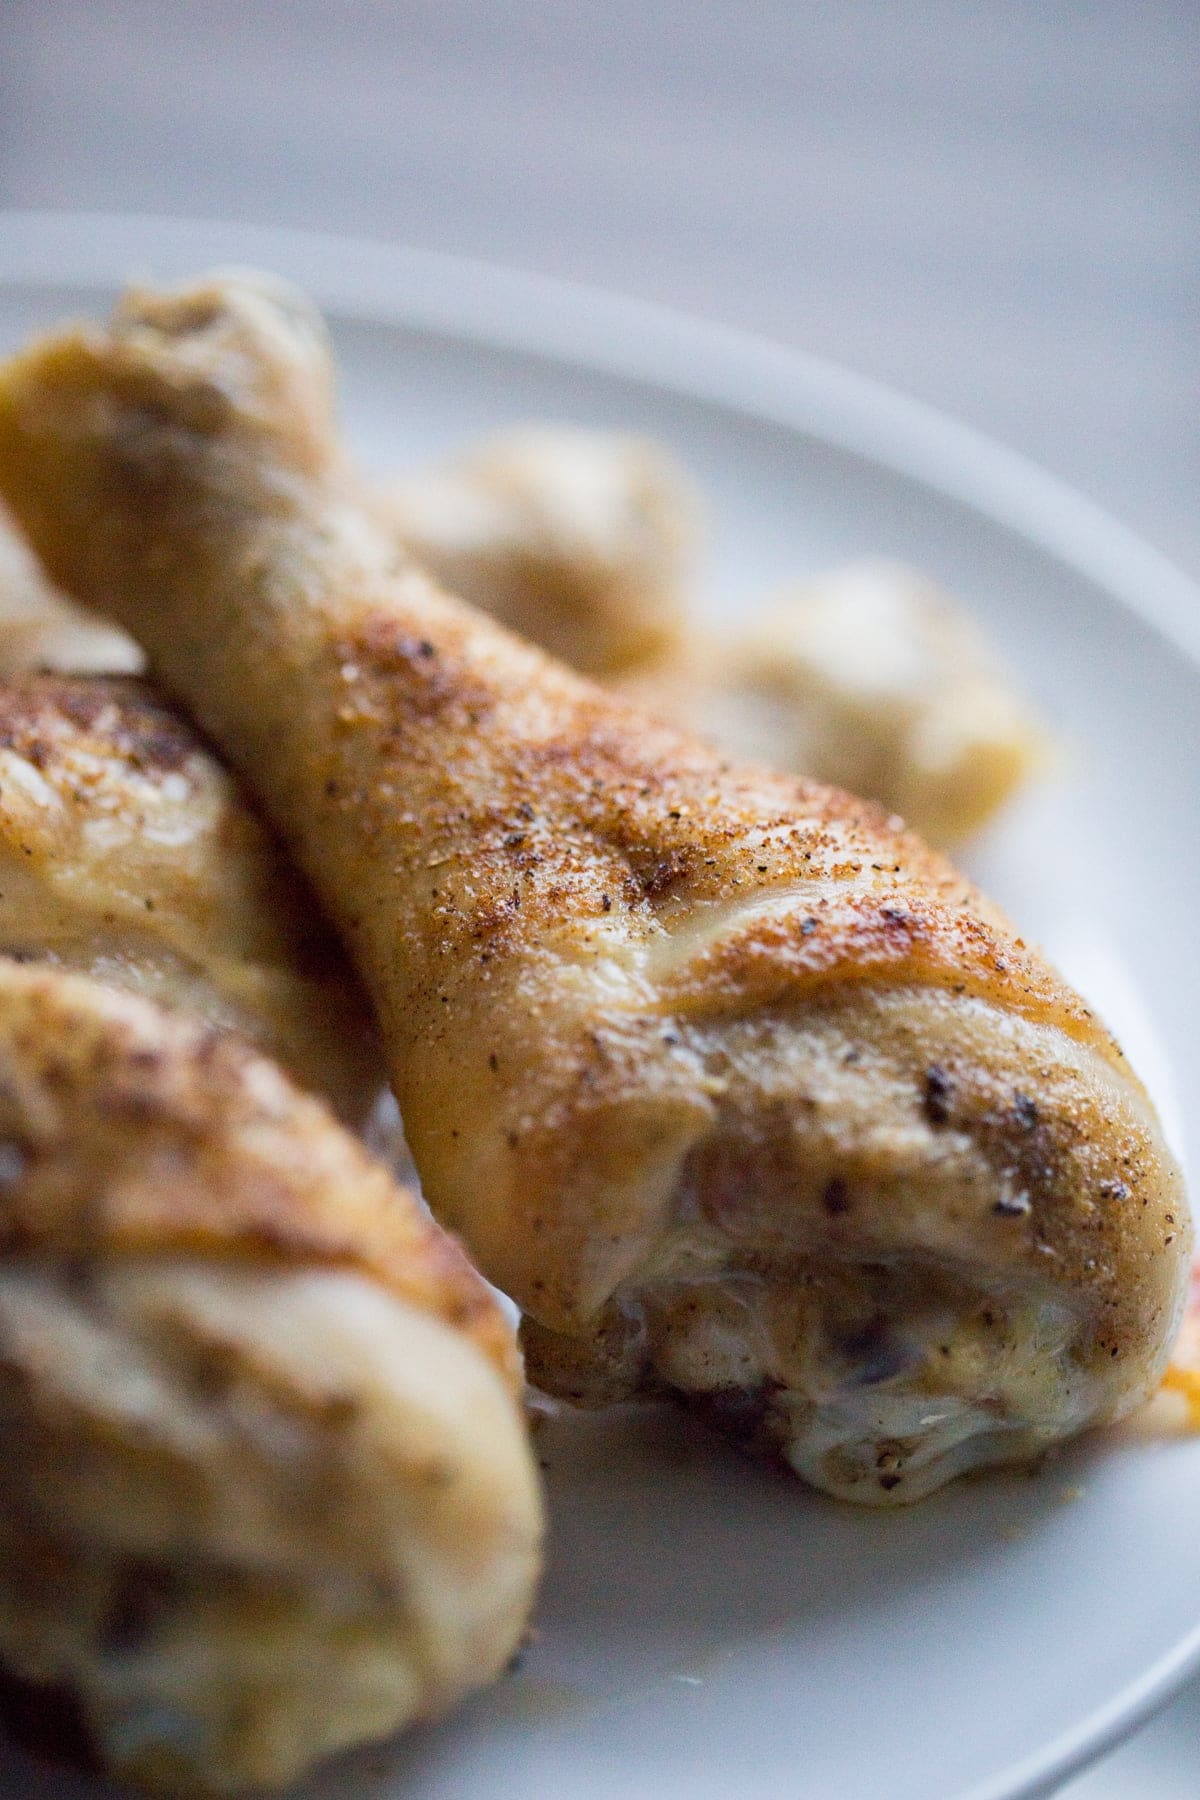 baked chicken legs